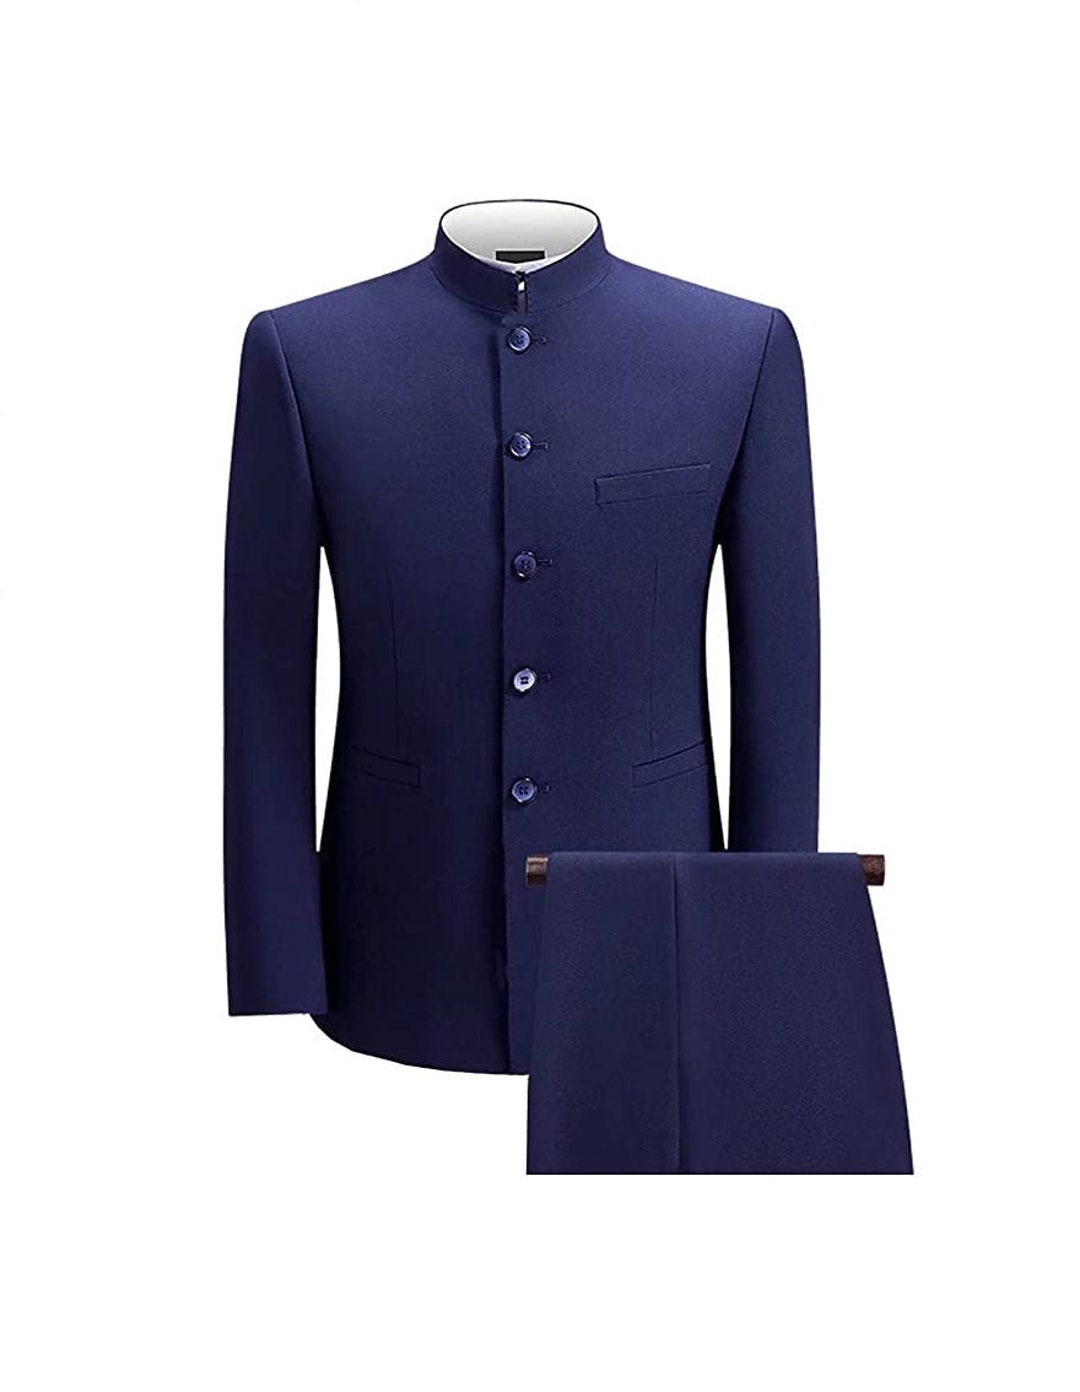 Blue Indian Ethnic Stylish Jodhpuri Suit for Men, Mandarin Suit for Men ...